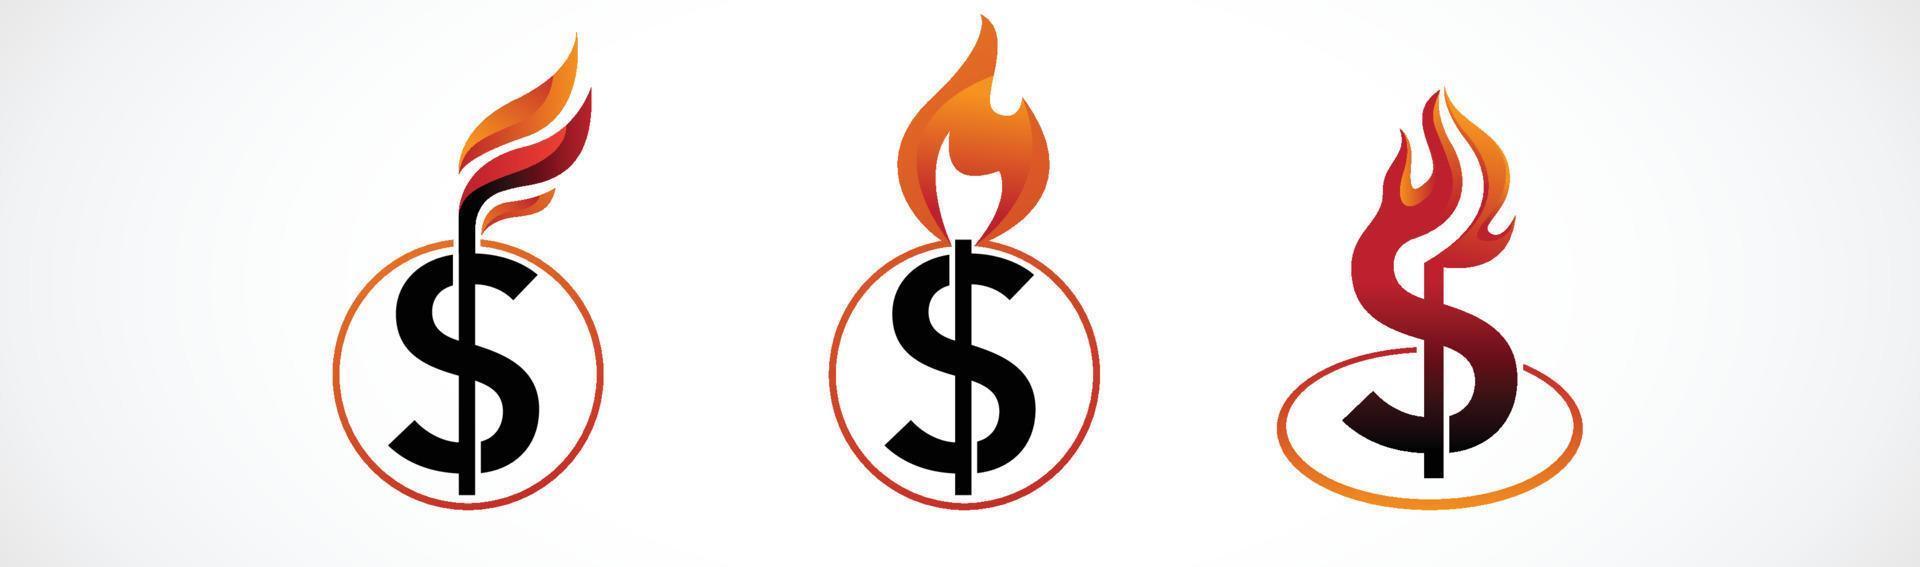 dollar logo flamme vecteur